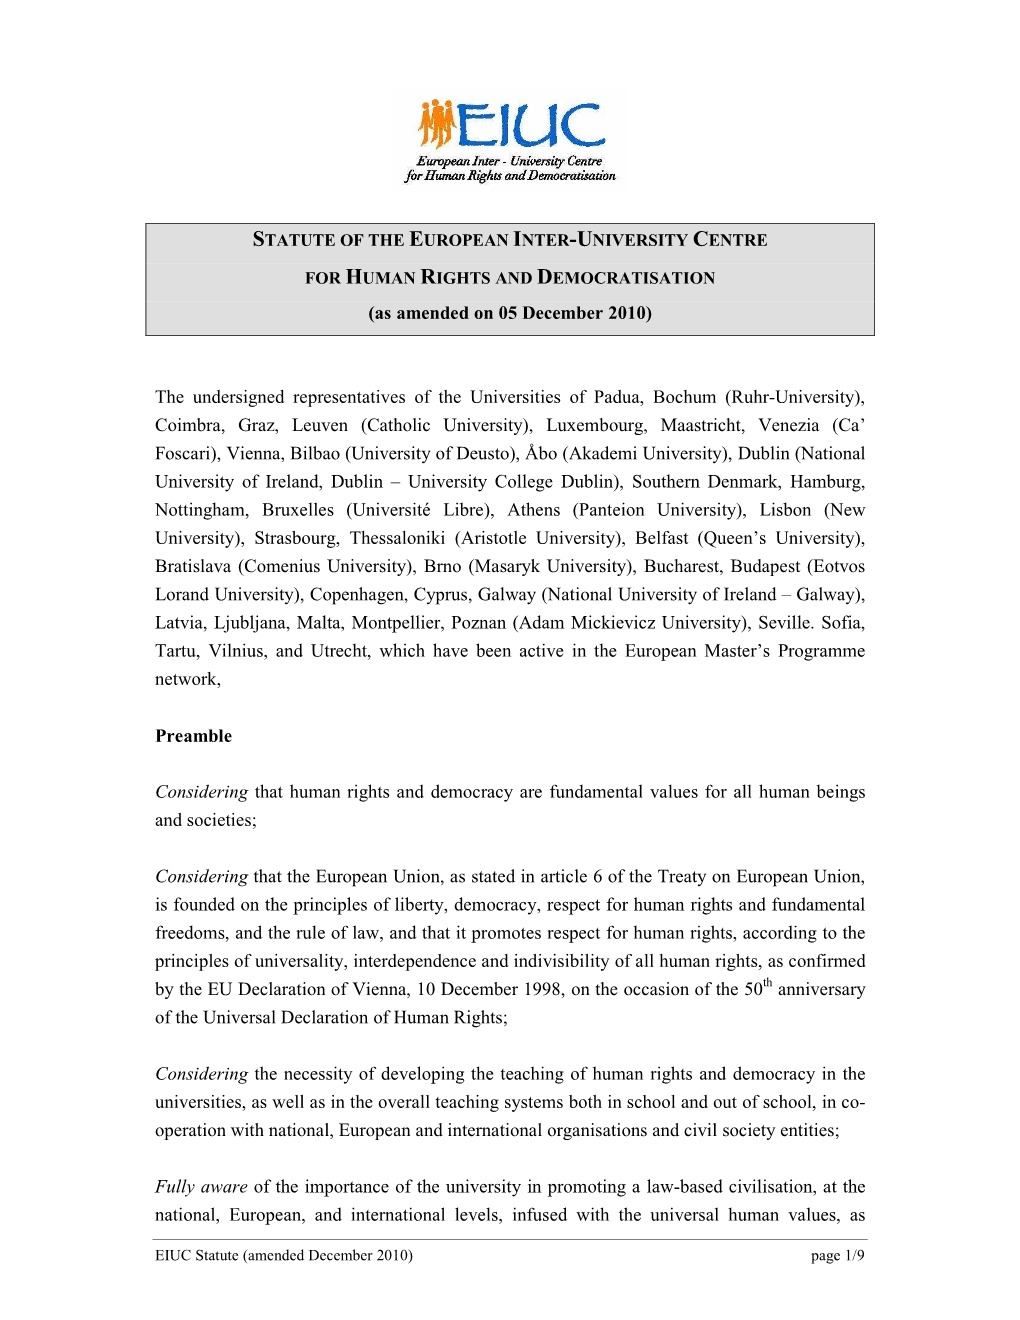 EIUC Statute As Amended April 2004 English Version